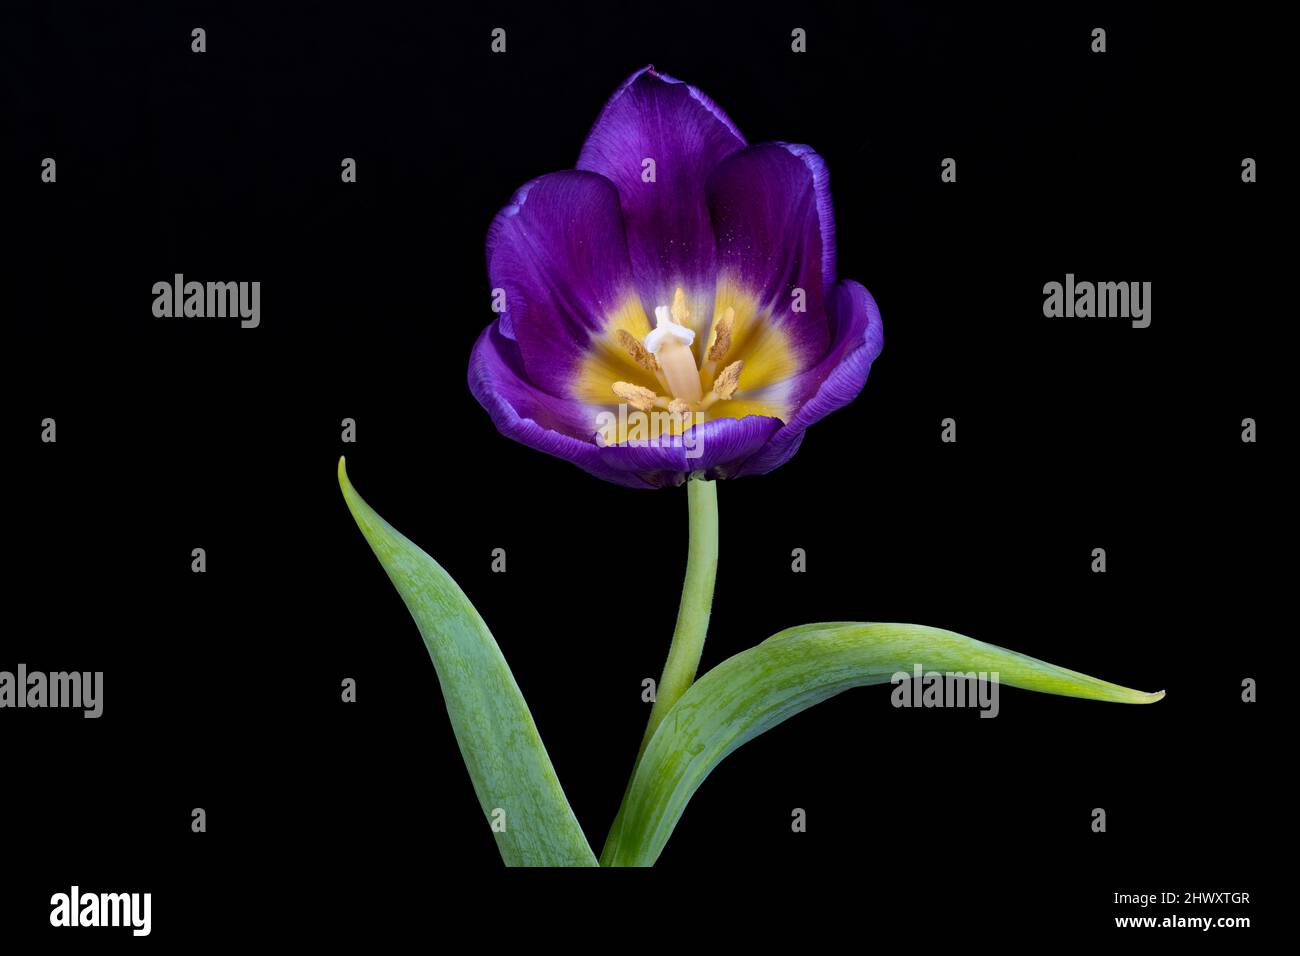 Gorgeous solitary purple Tulip photographed against a plain black background Stock Photo